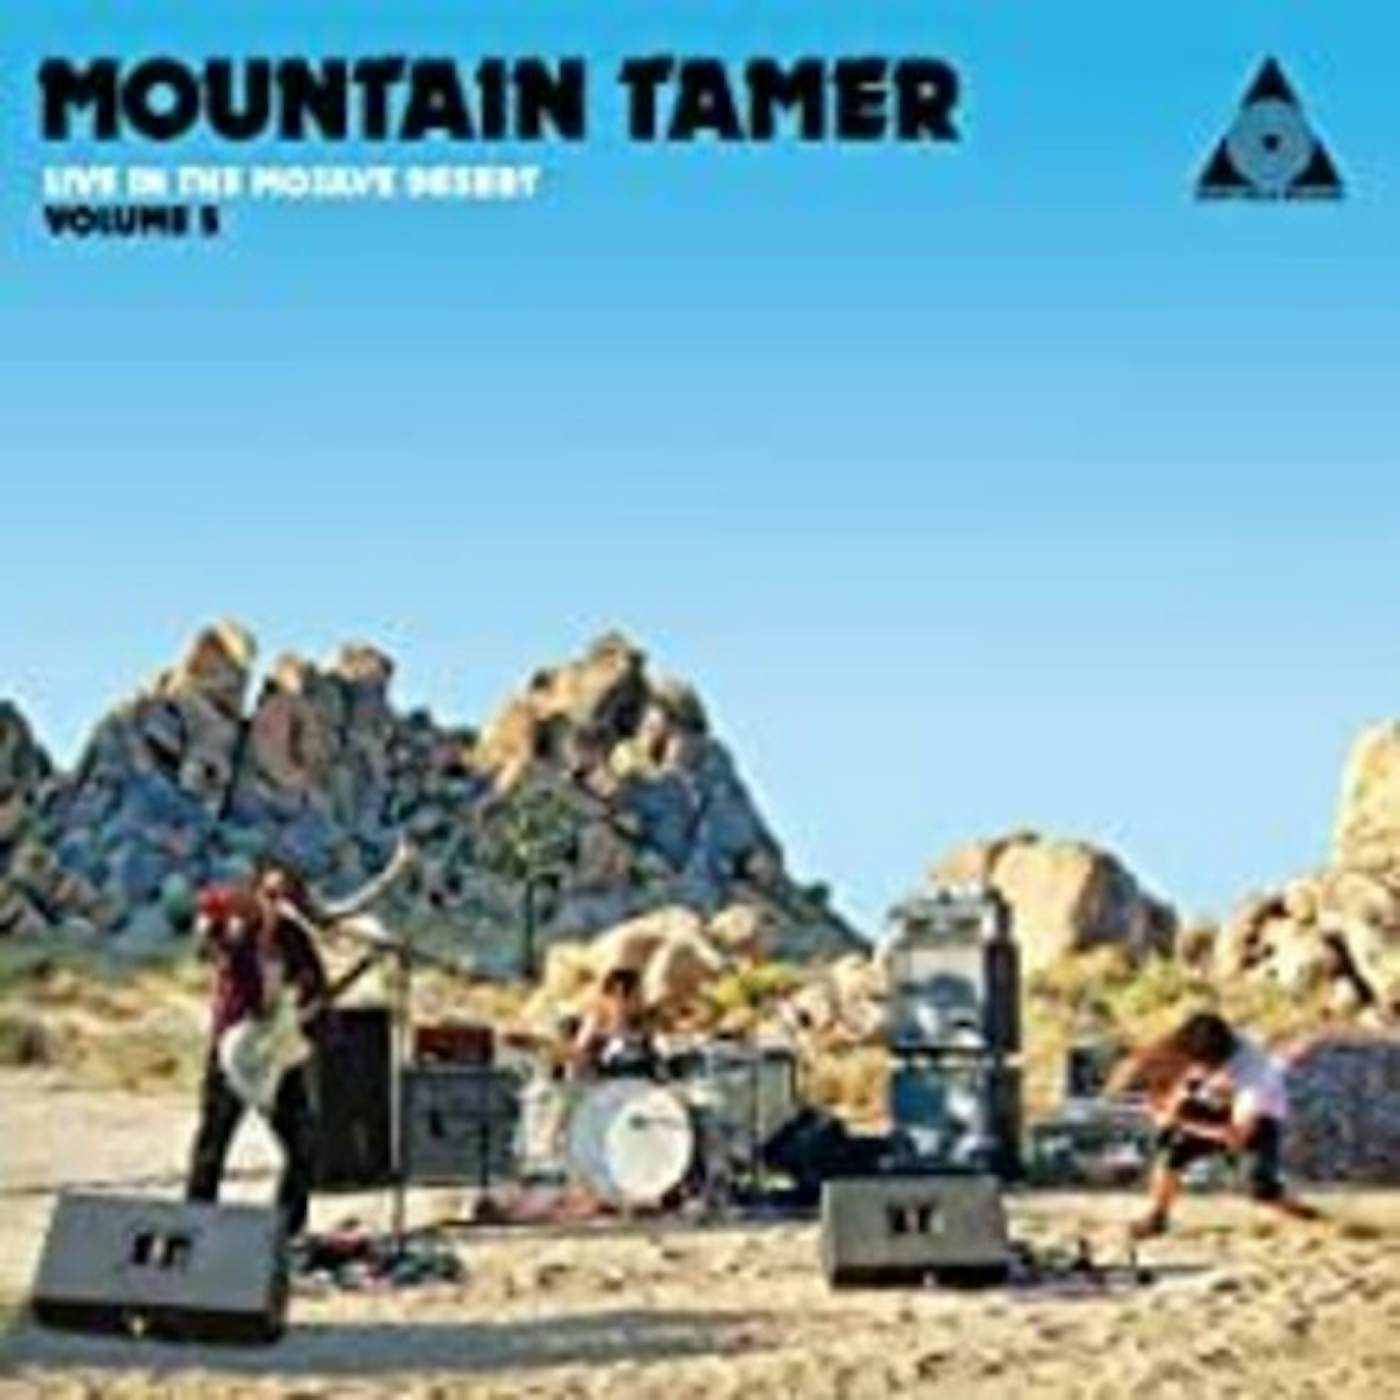 MOUNTAIN TAMER LIVE IN THE MOJAVE DESERT: VOLUME 5 Blu-ray